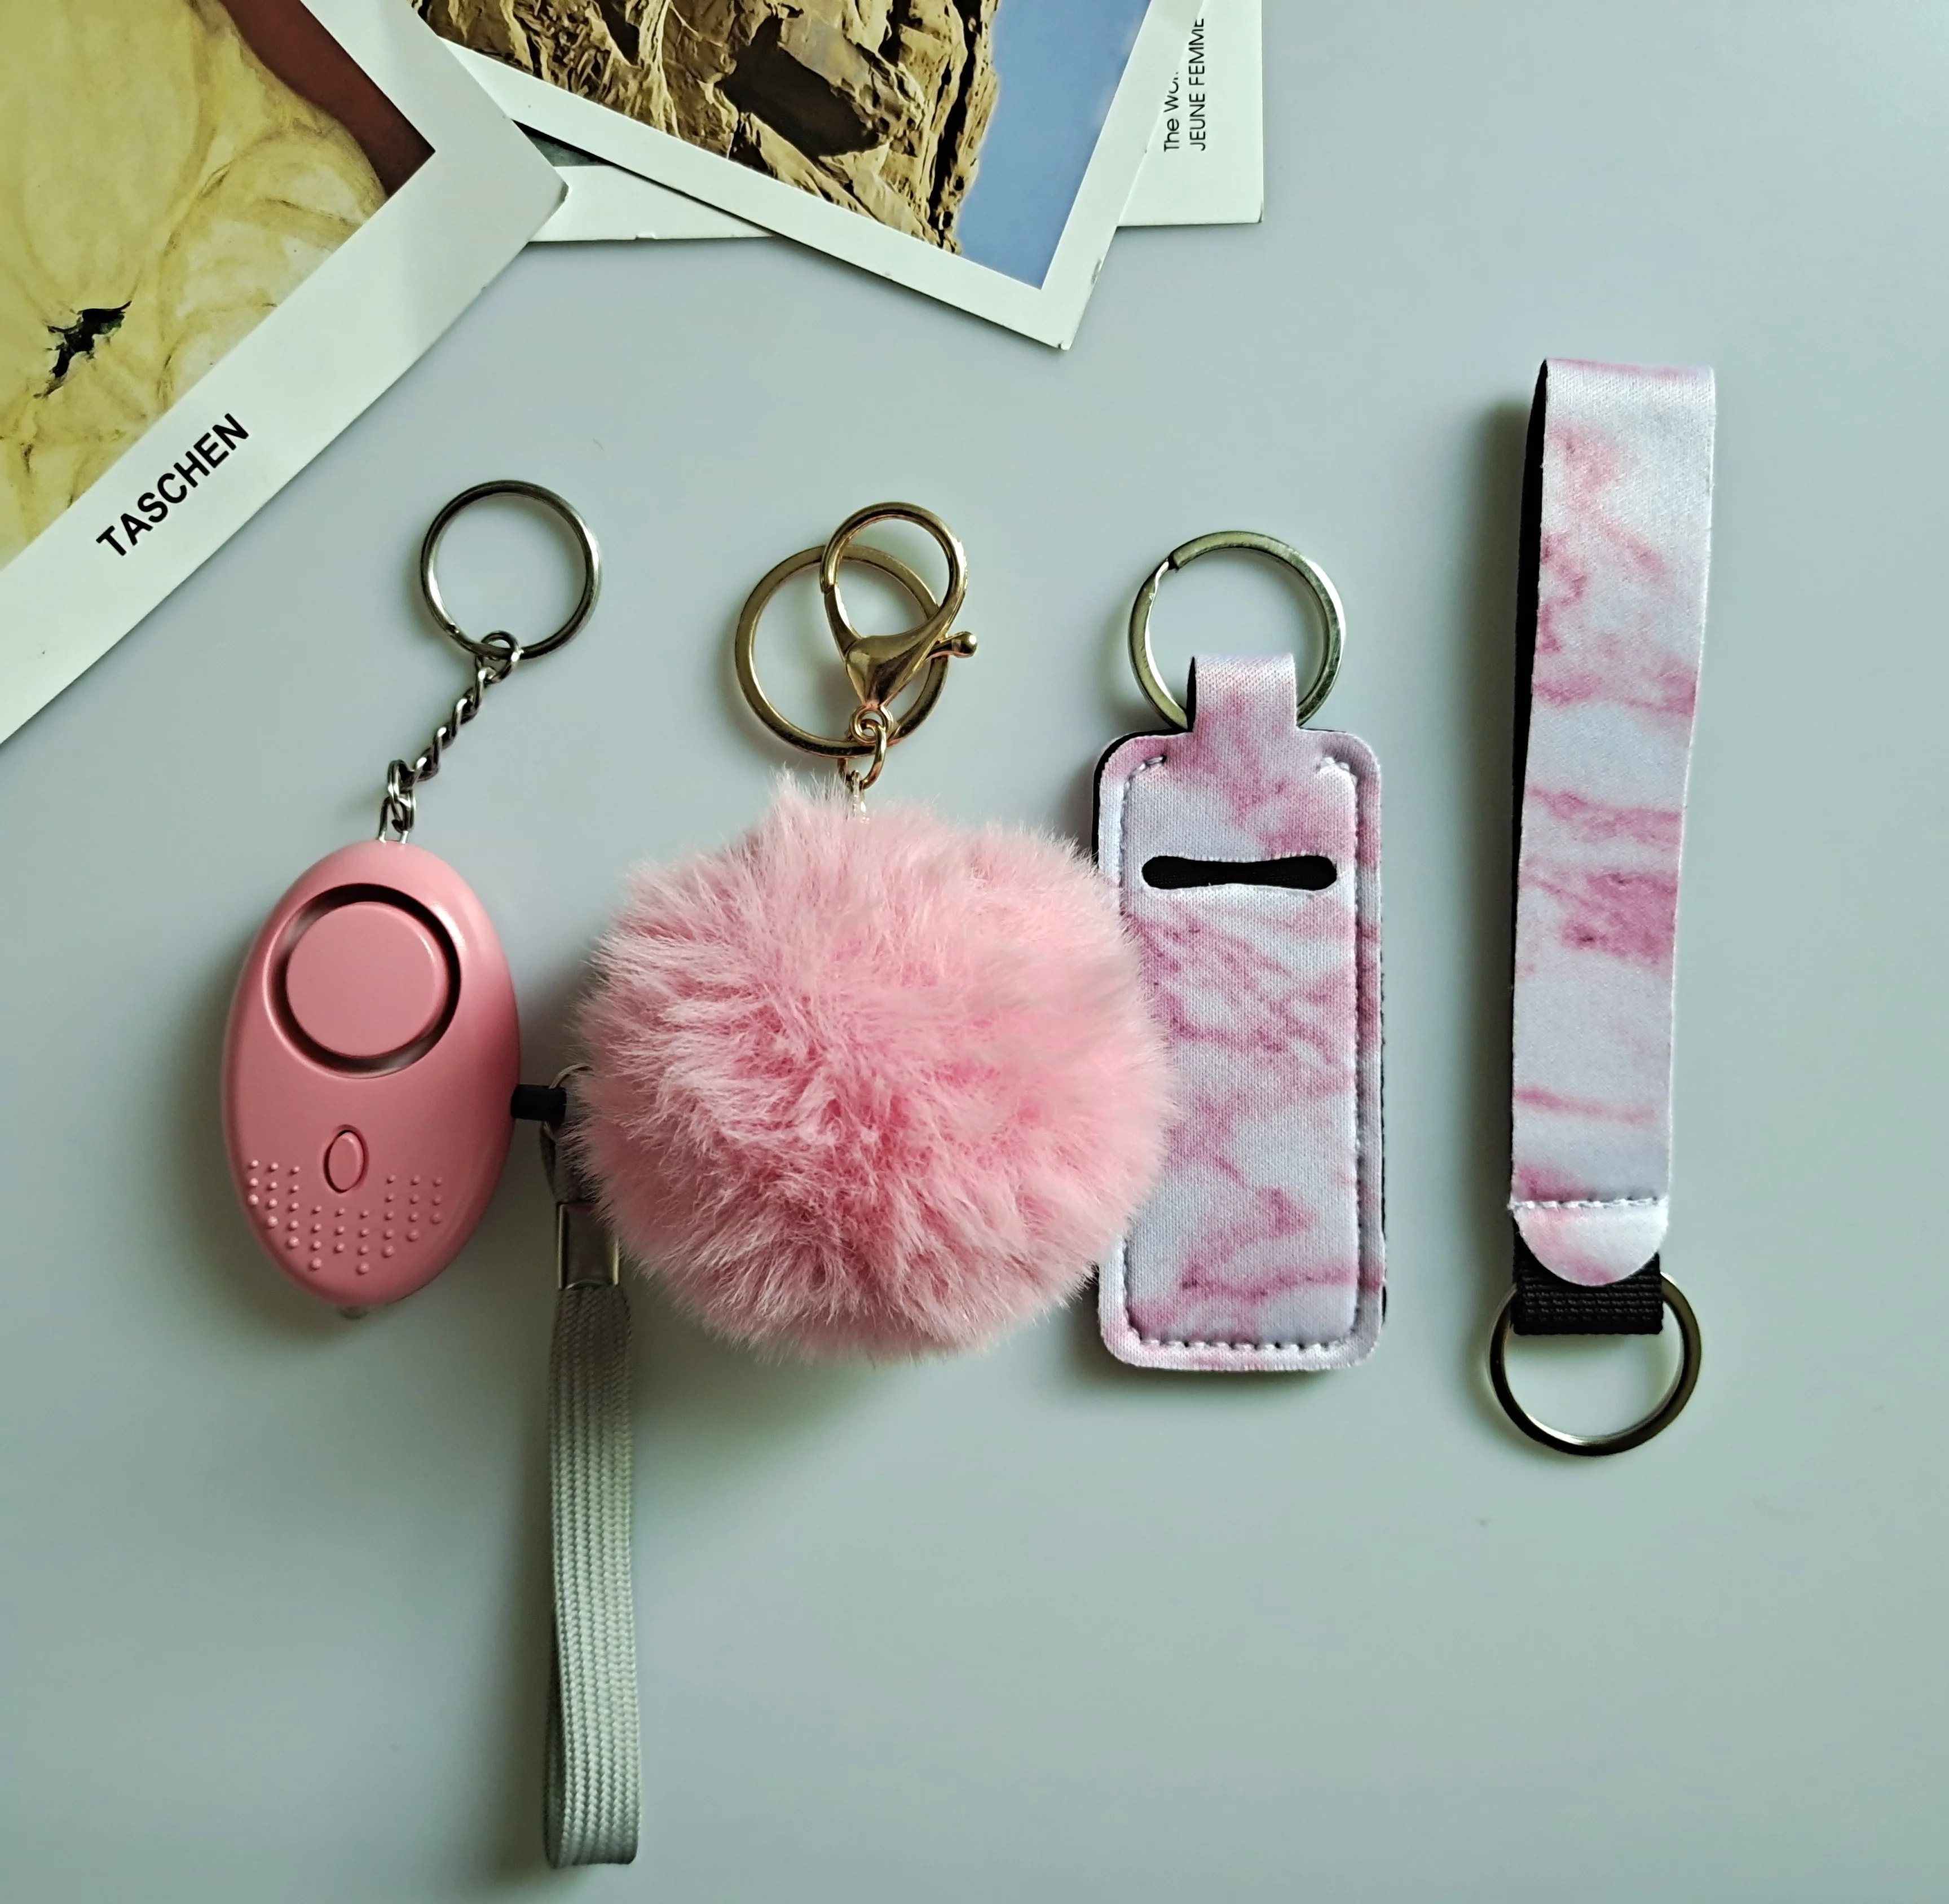 
New Fashion Pom Pom Lip Chapstick Holder Wristlet with LED Alarm Keychain Self Defence Products Set For Women  (1600223091617)